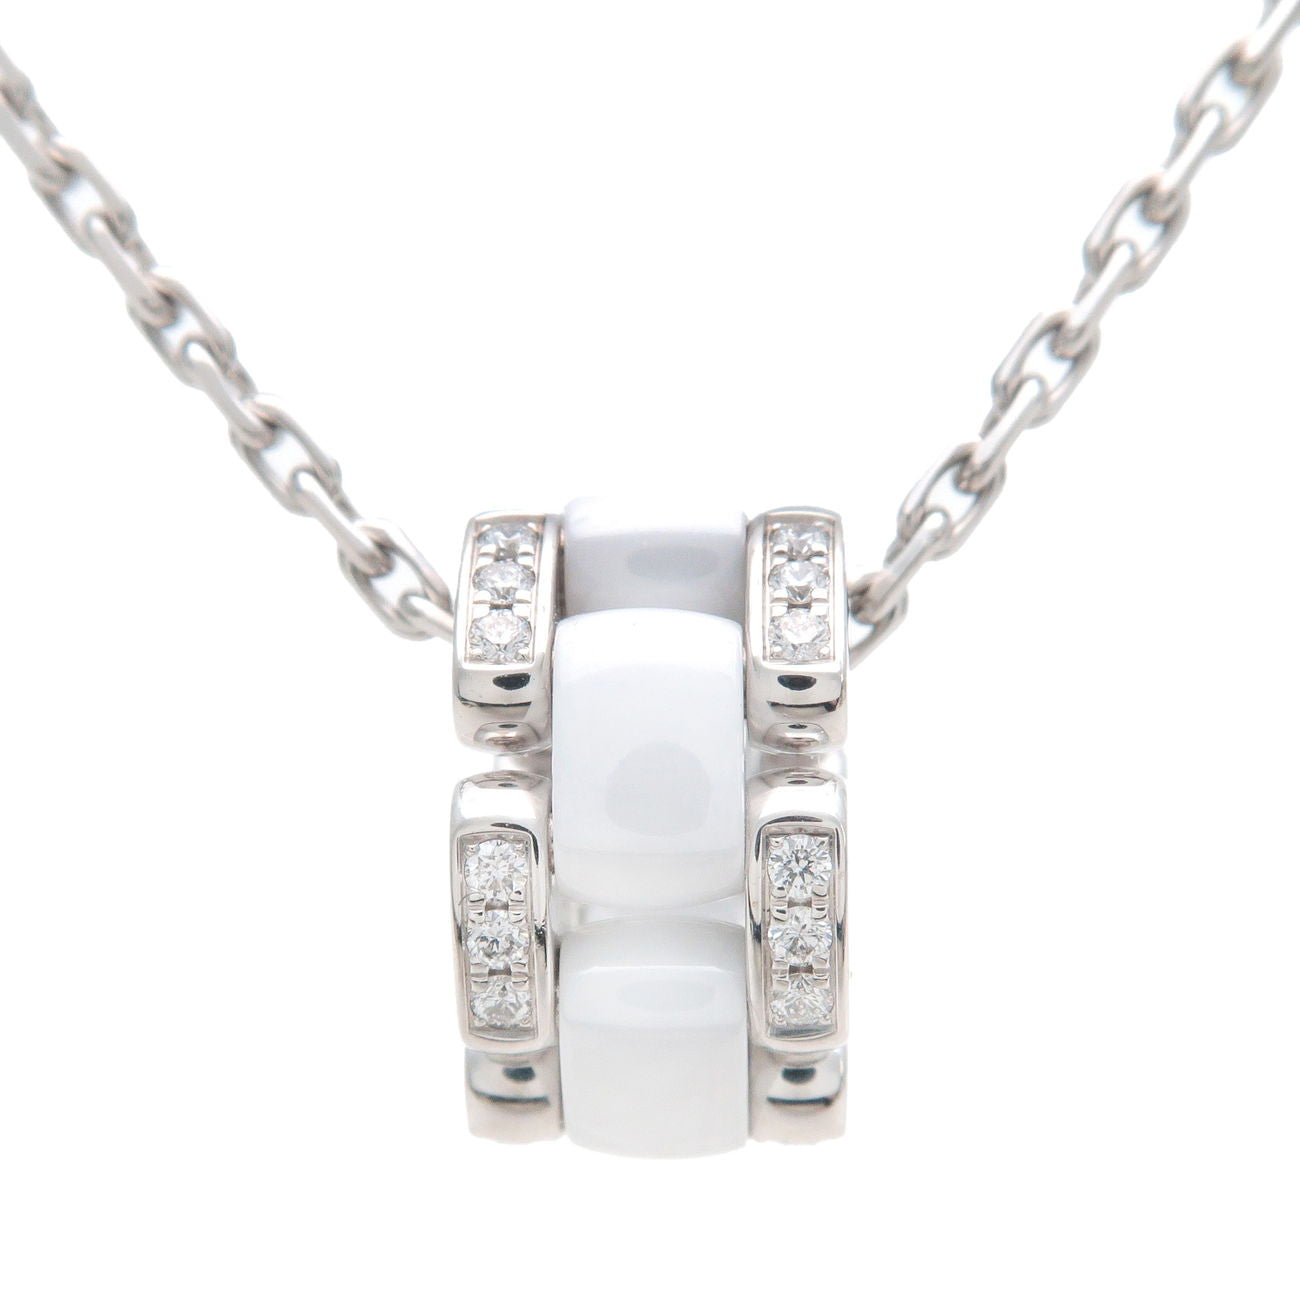 Chanel Ultra Wide 18k White Gold Diamond White Ceramic Ring Size 62 +Box  J2645